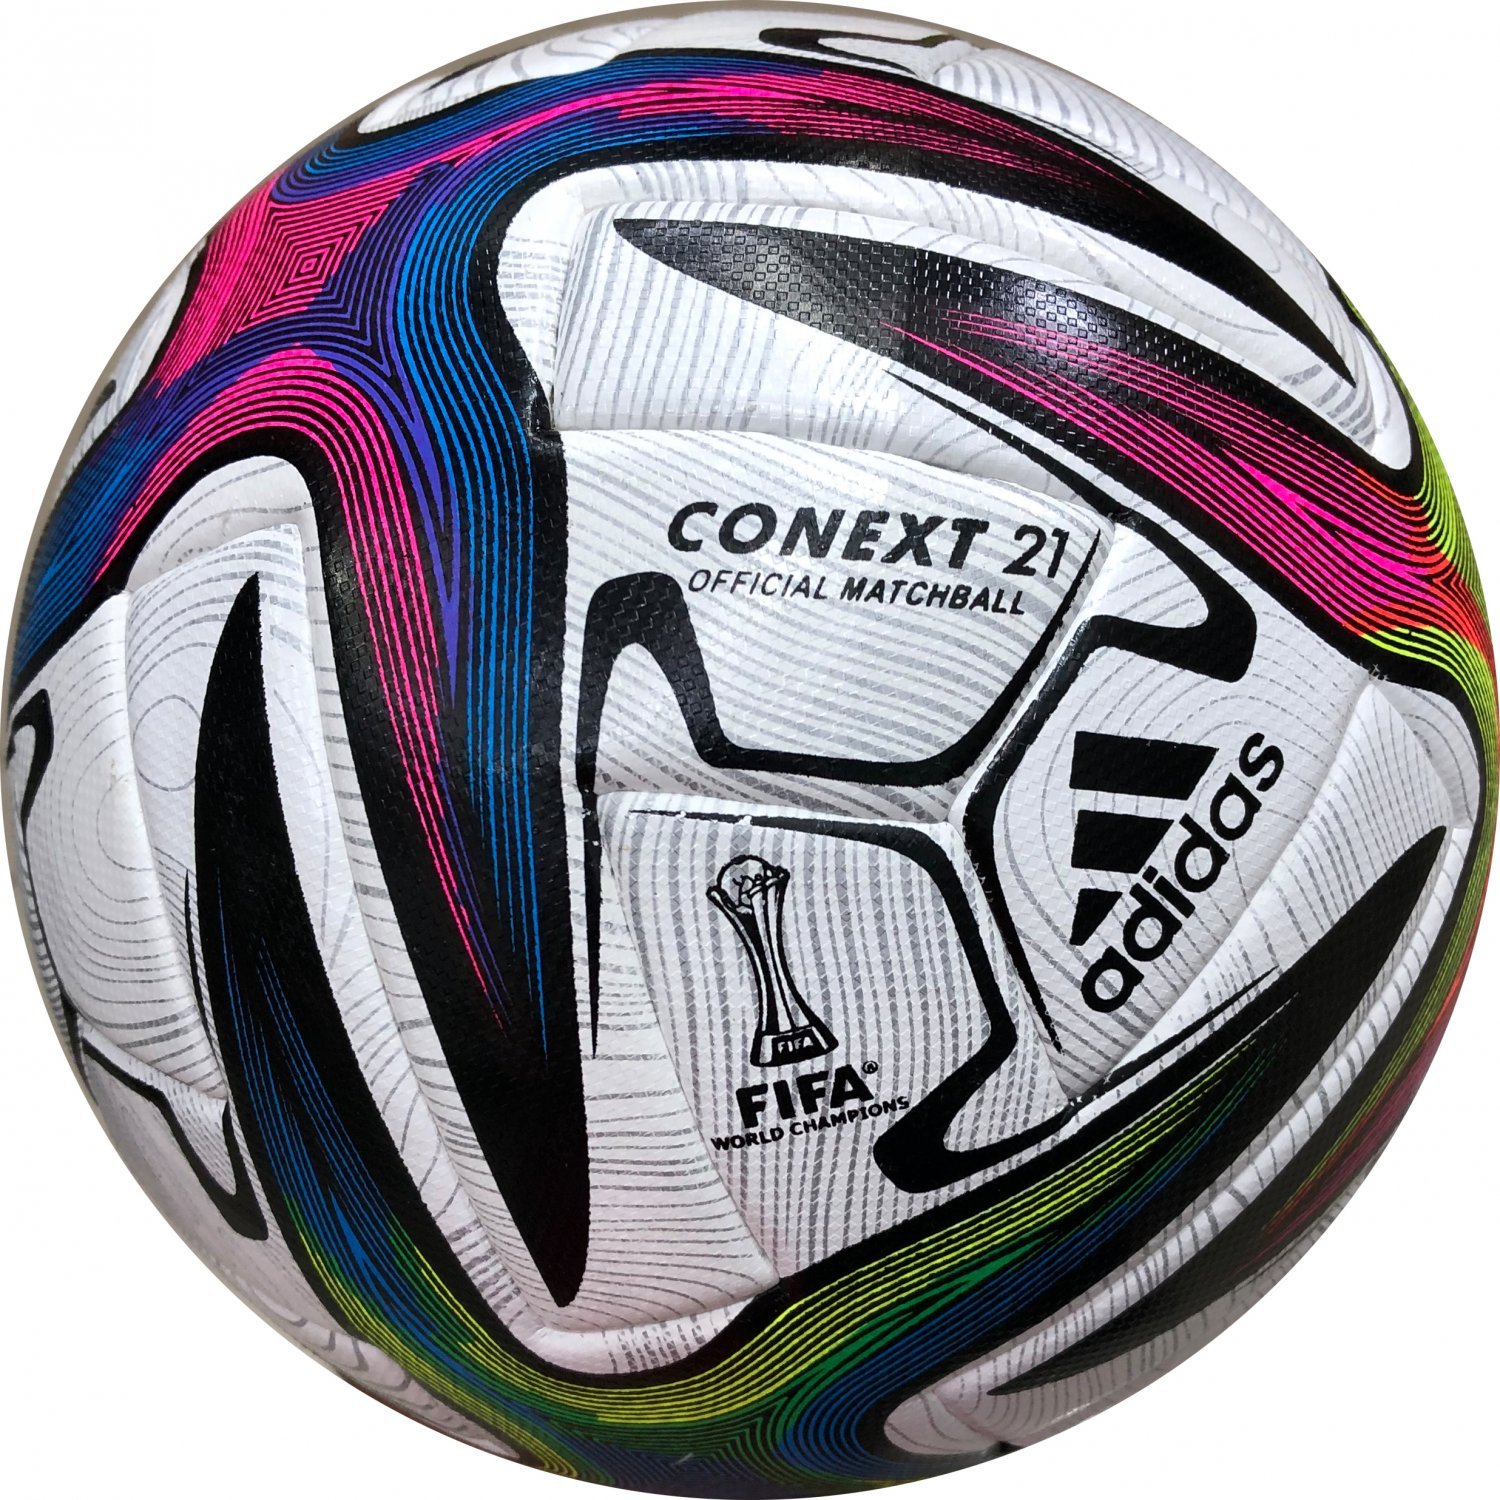 Sale Buy 2 Adidas Conext 21 Women's World Cup SOCCER MATCH BALL 5